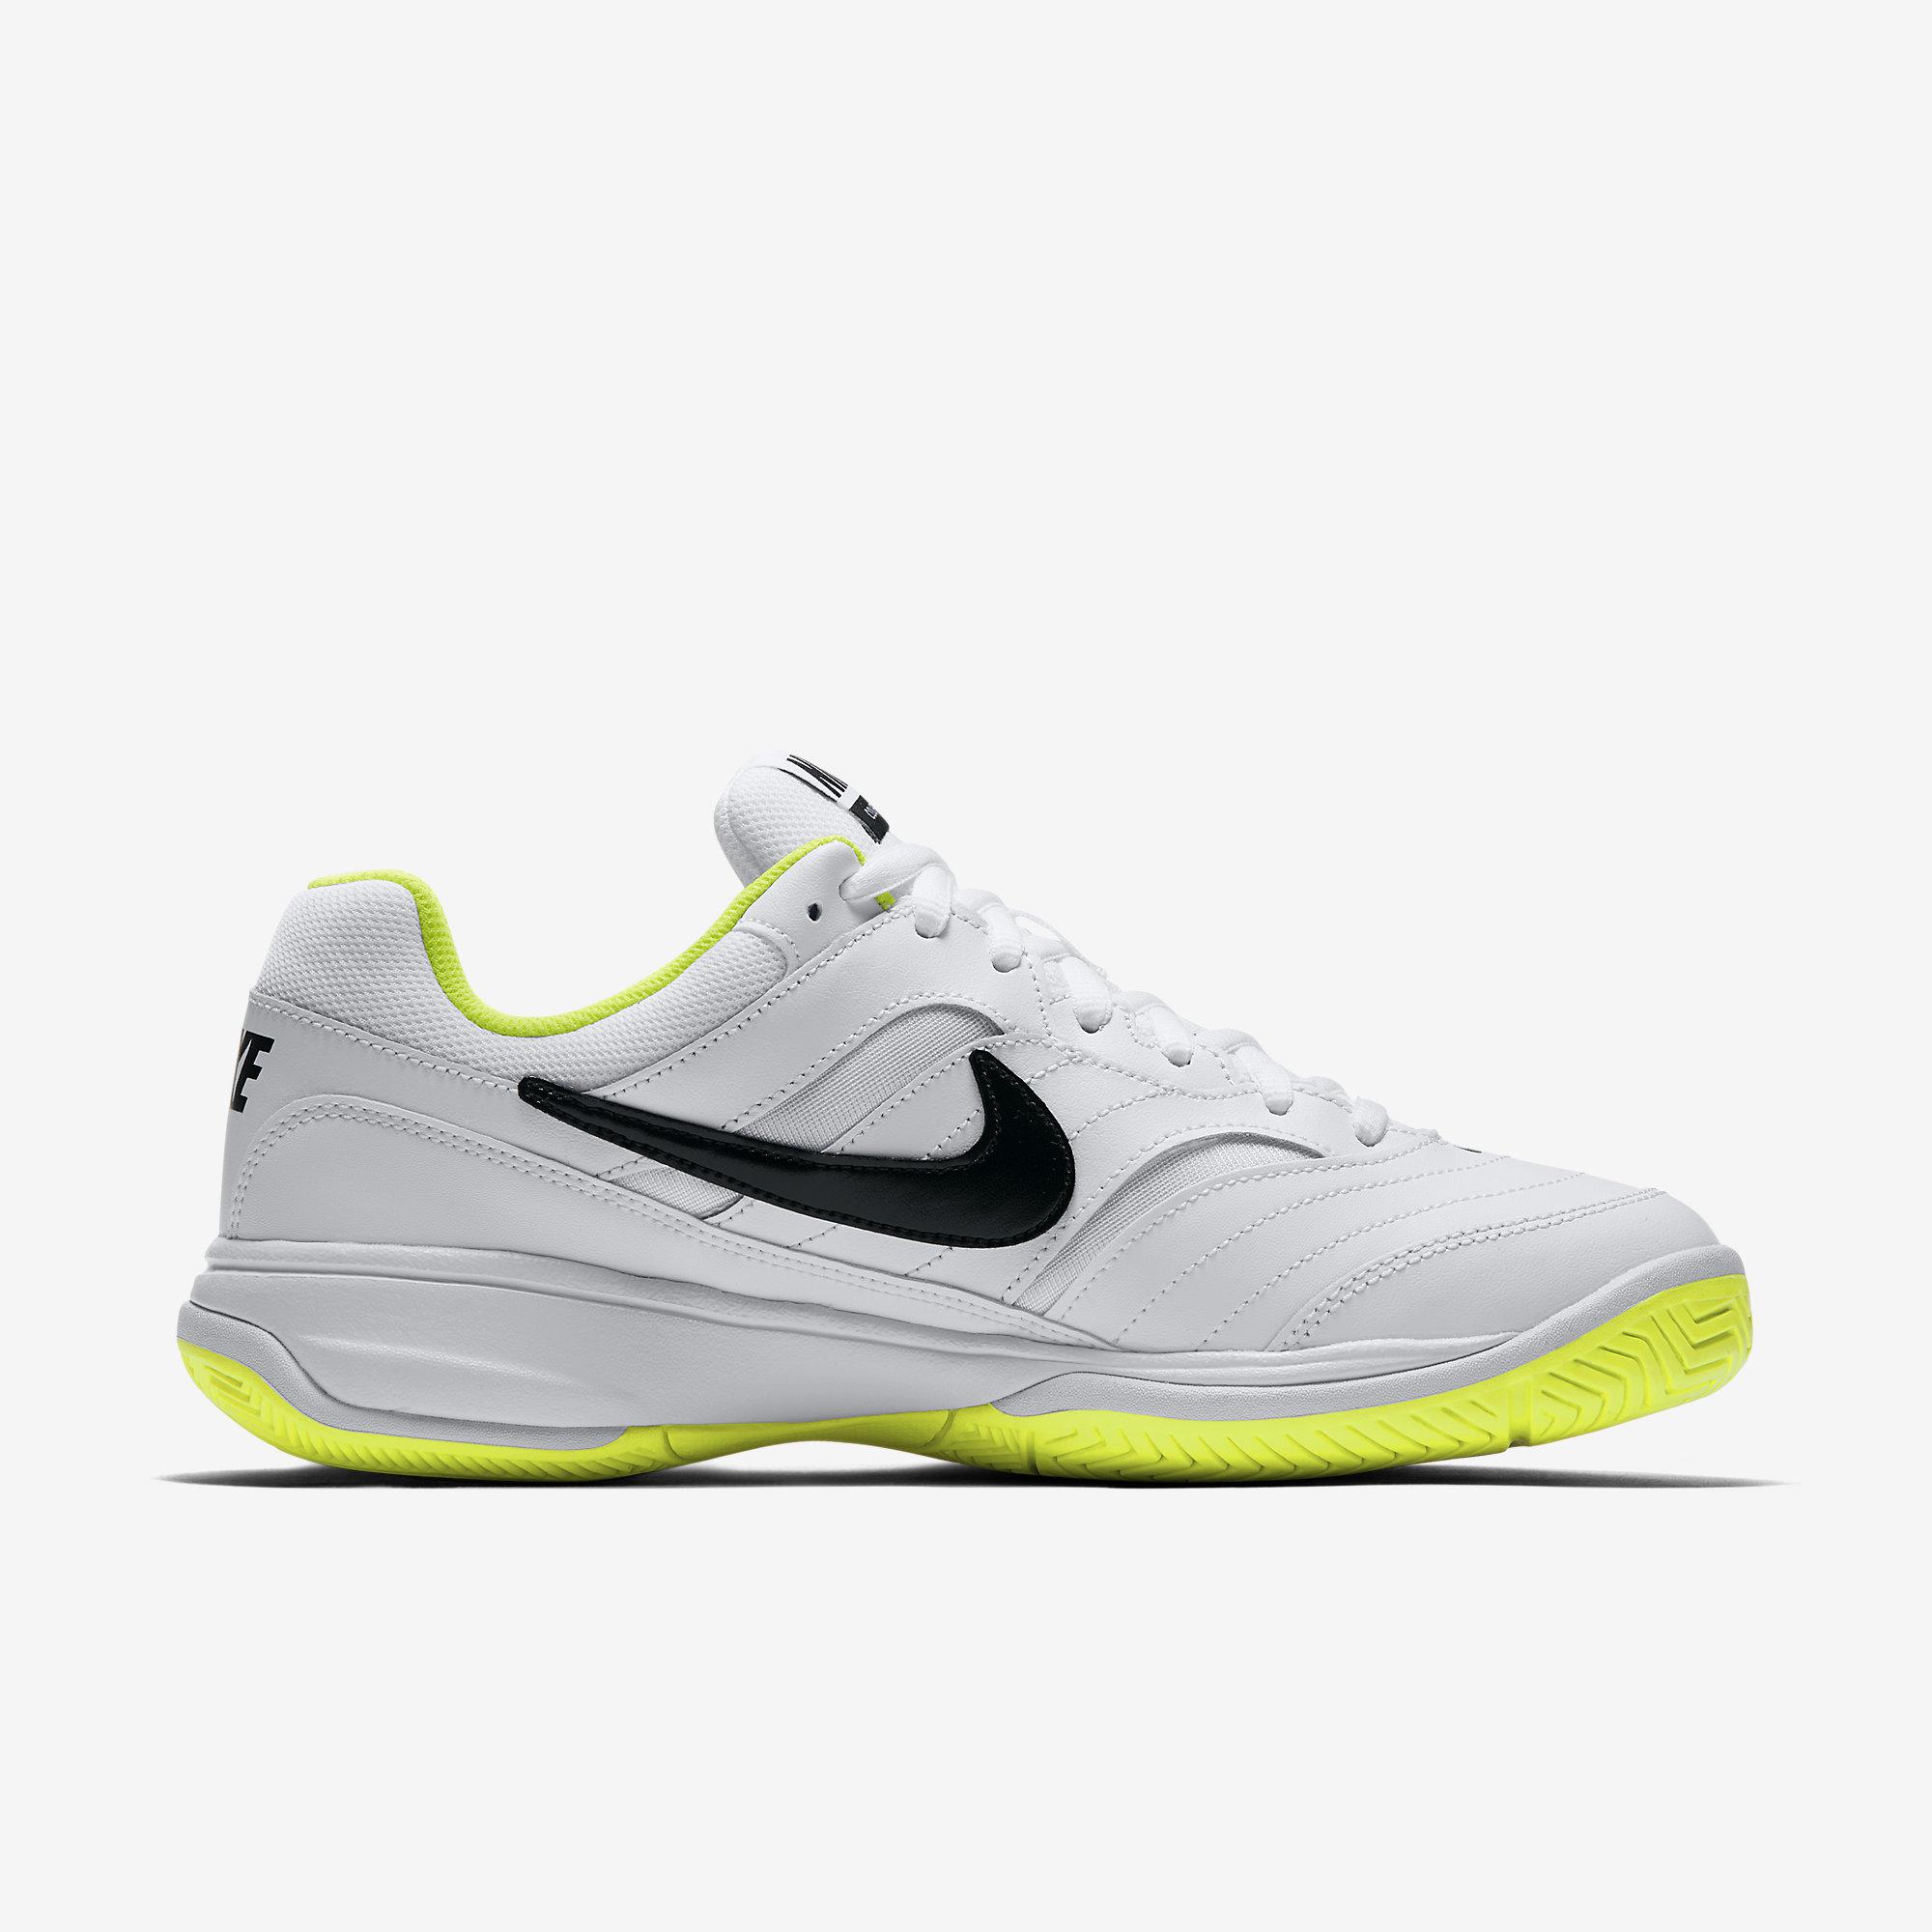 Nike Mens Court Lite Tennis Shoes - White/Volt - Tennisnuts.com